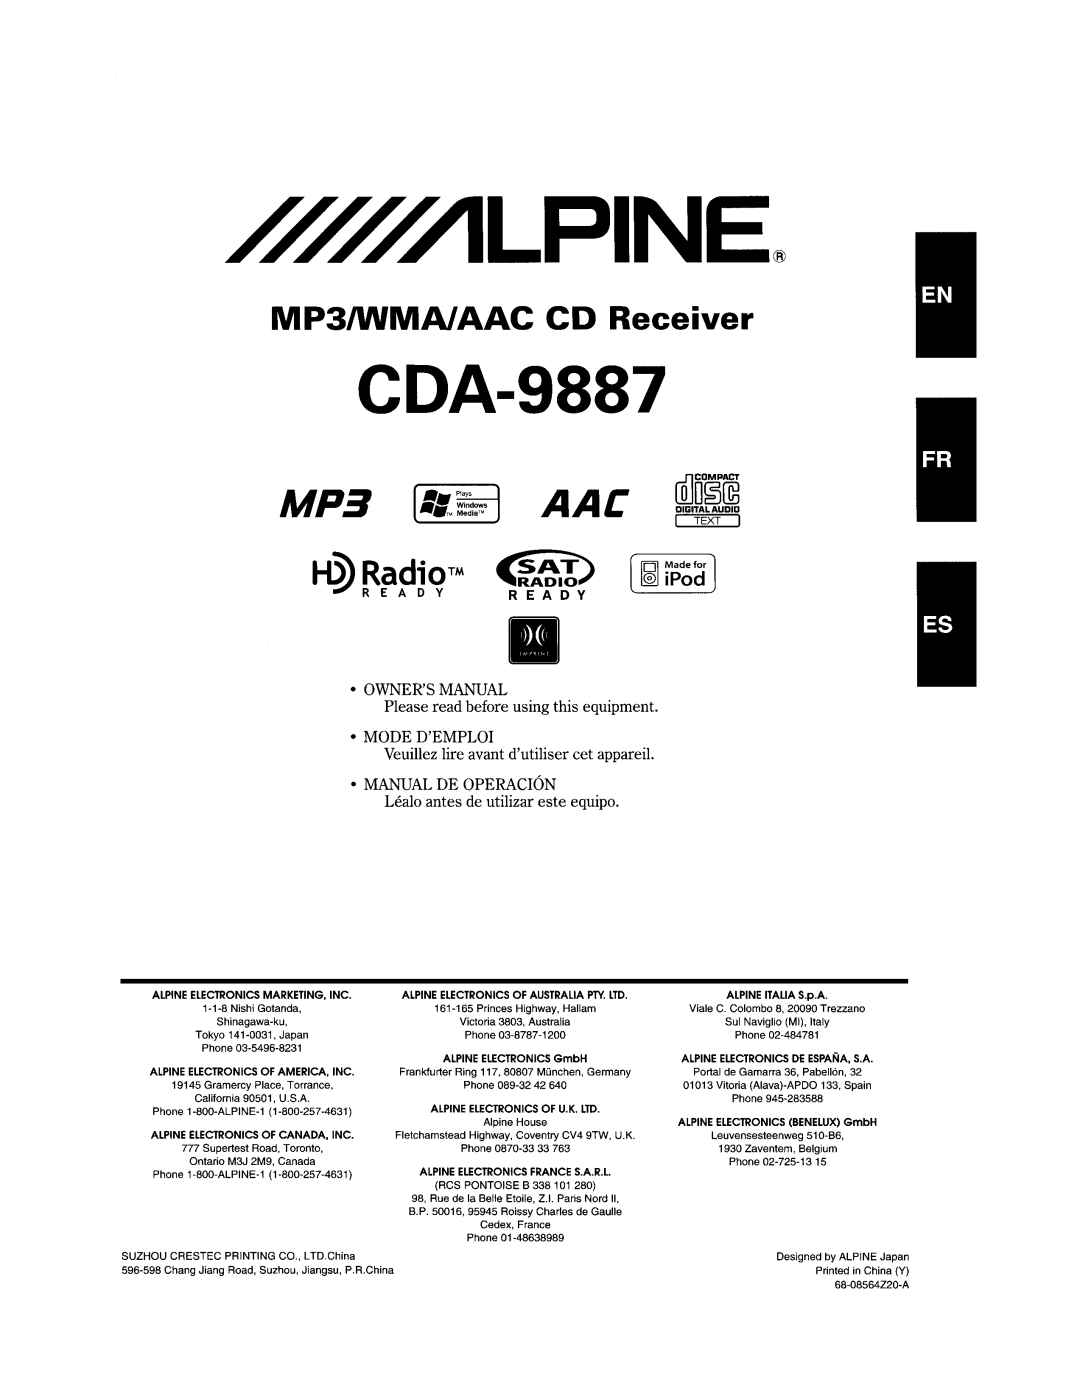 Alpine CDA-9887 owner manual MP3IWMAlAAC CD Receiver, illD~1m, MP3AAC, H3Radio ~A~IO..~l 